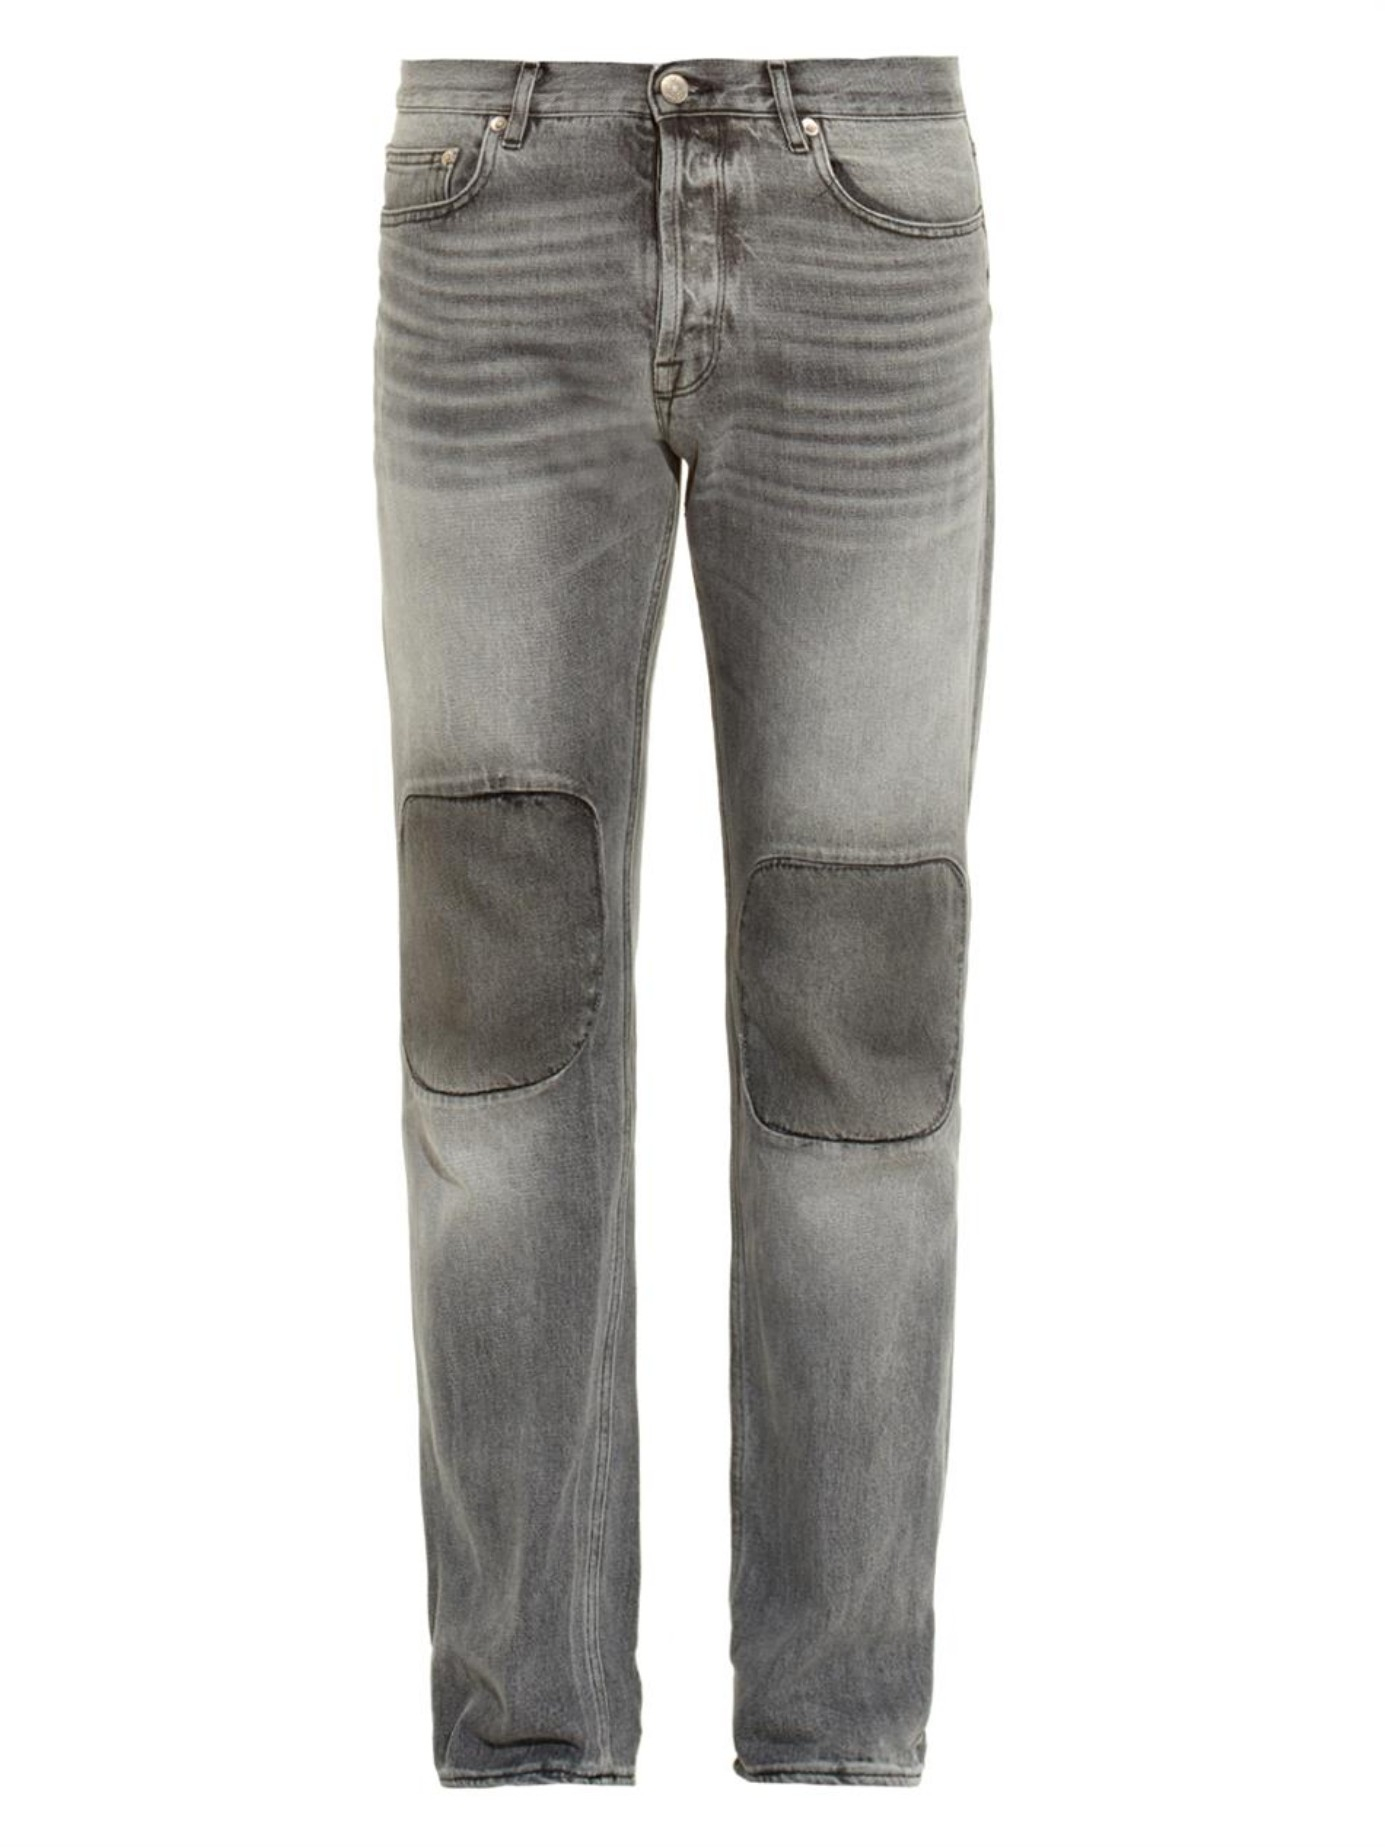 Lyst - Golden Goose Deluxe Brand Knee-Patch Slim-Leg Jeans in Gray for Men